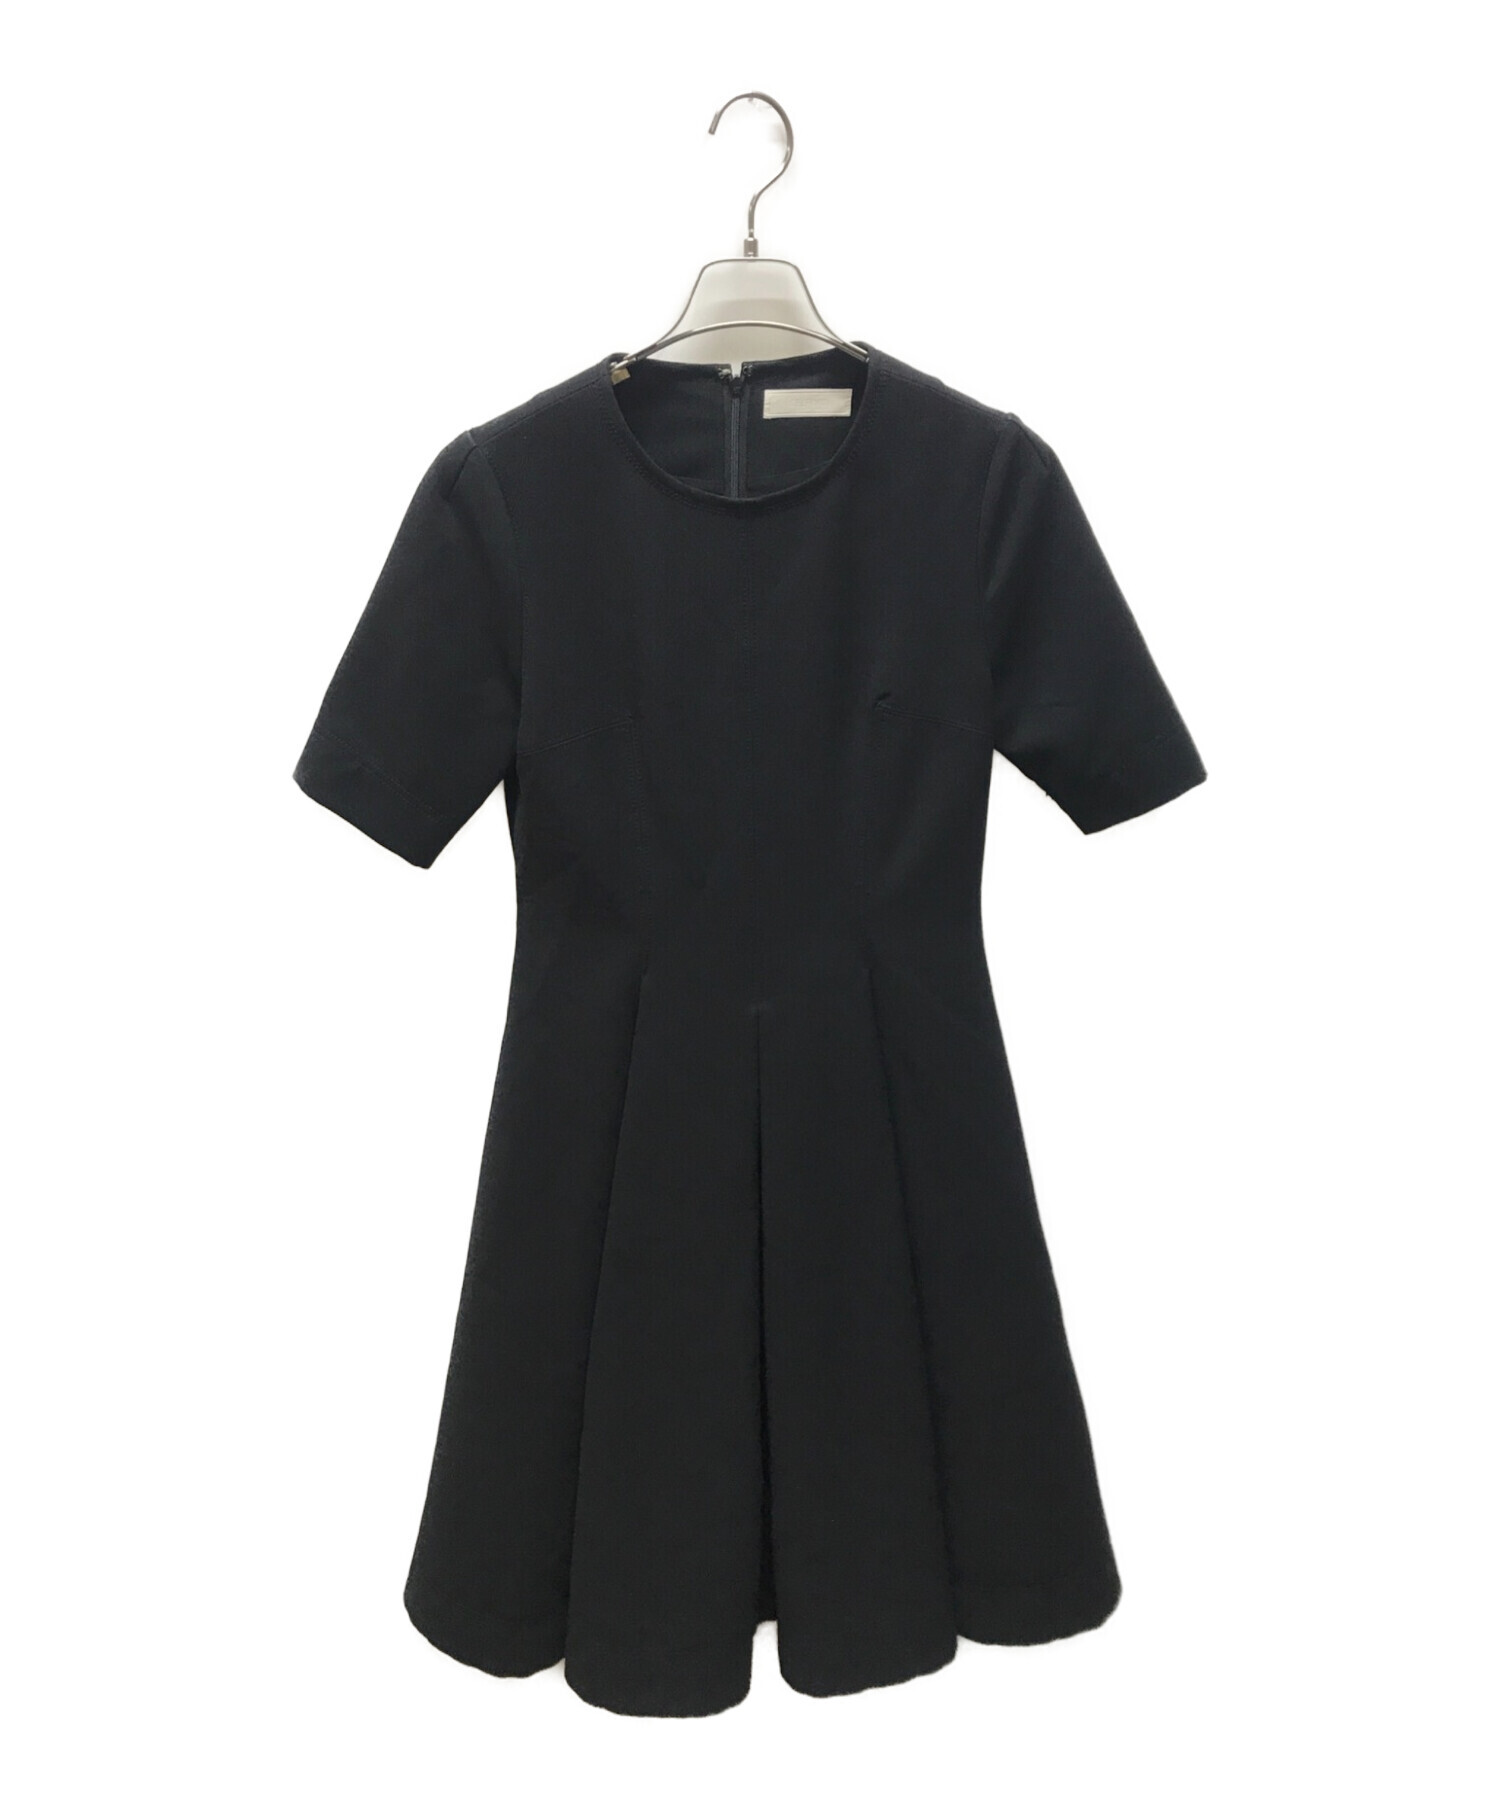 CELFORD セルフォード ドレス フレア ワンピース 38 ブラック 黒 